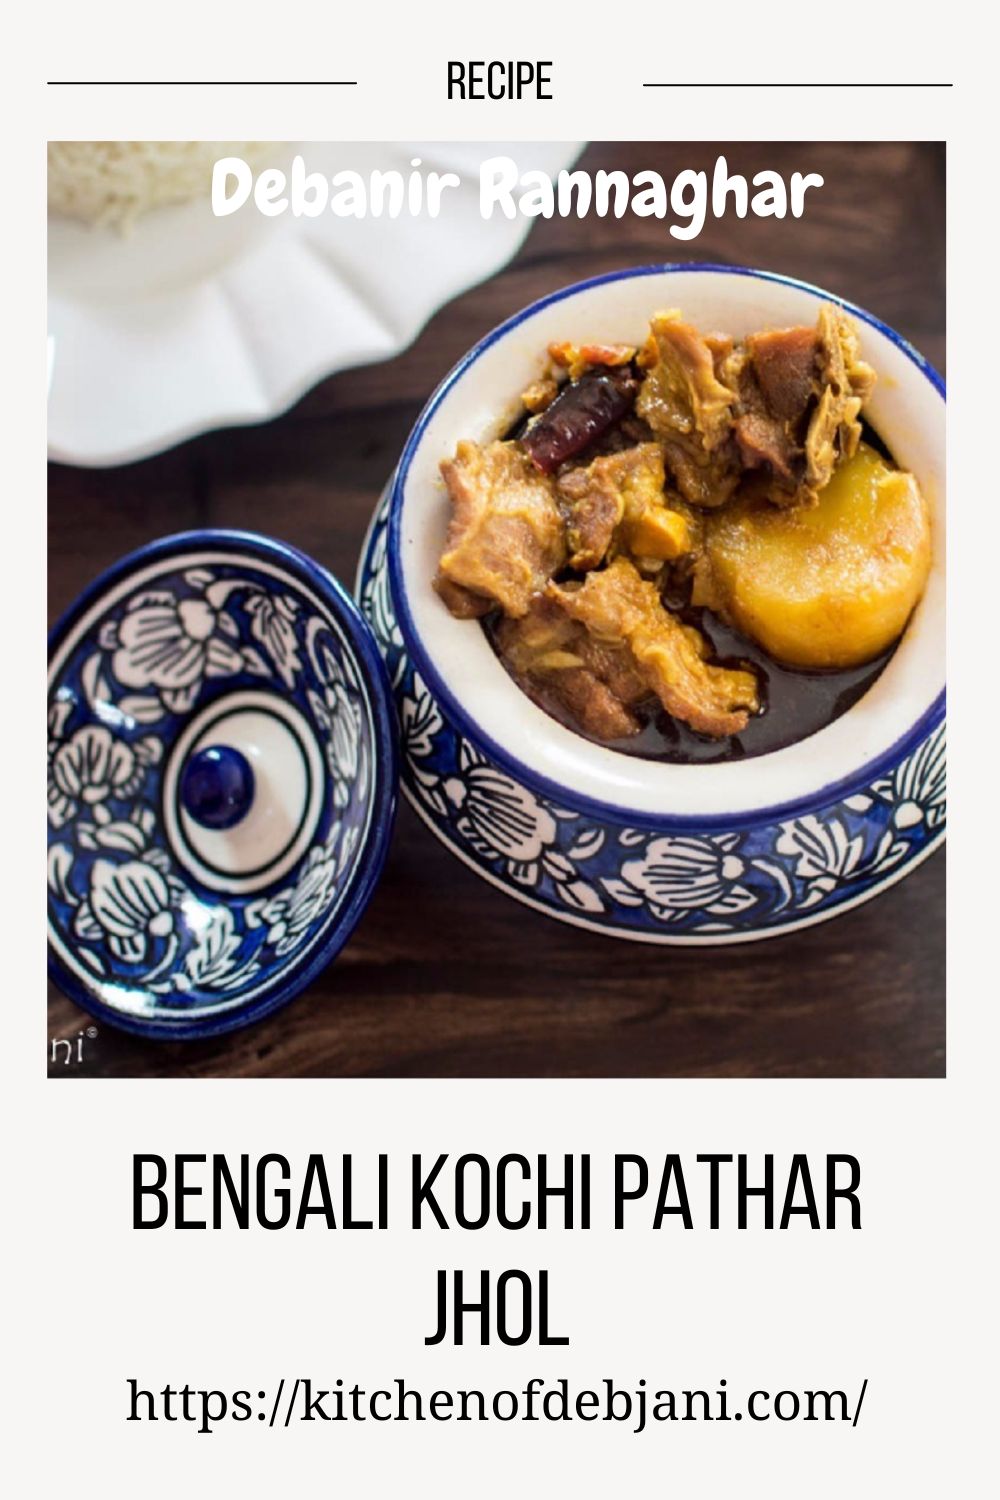 %Bengali Kochi Pathar Jhol Recipe debjanir Rannaghar Pinterest Pin